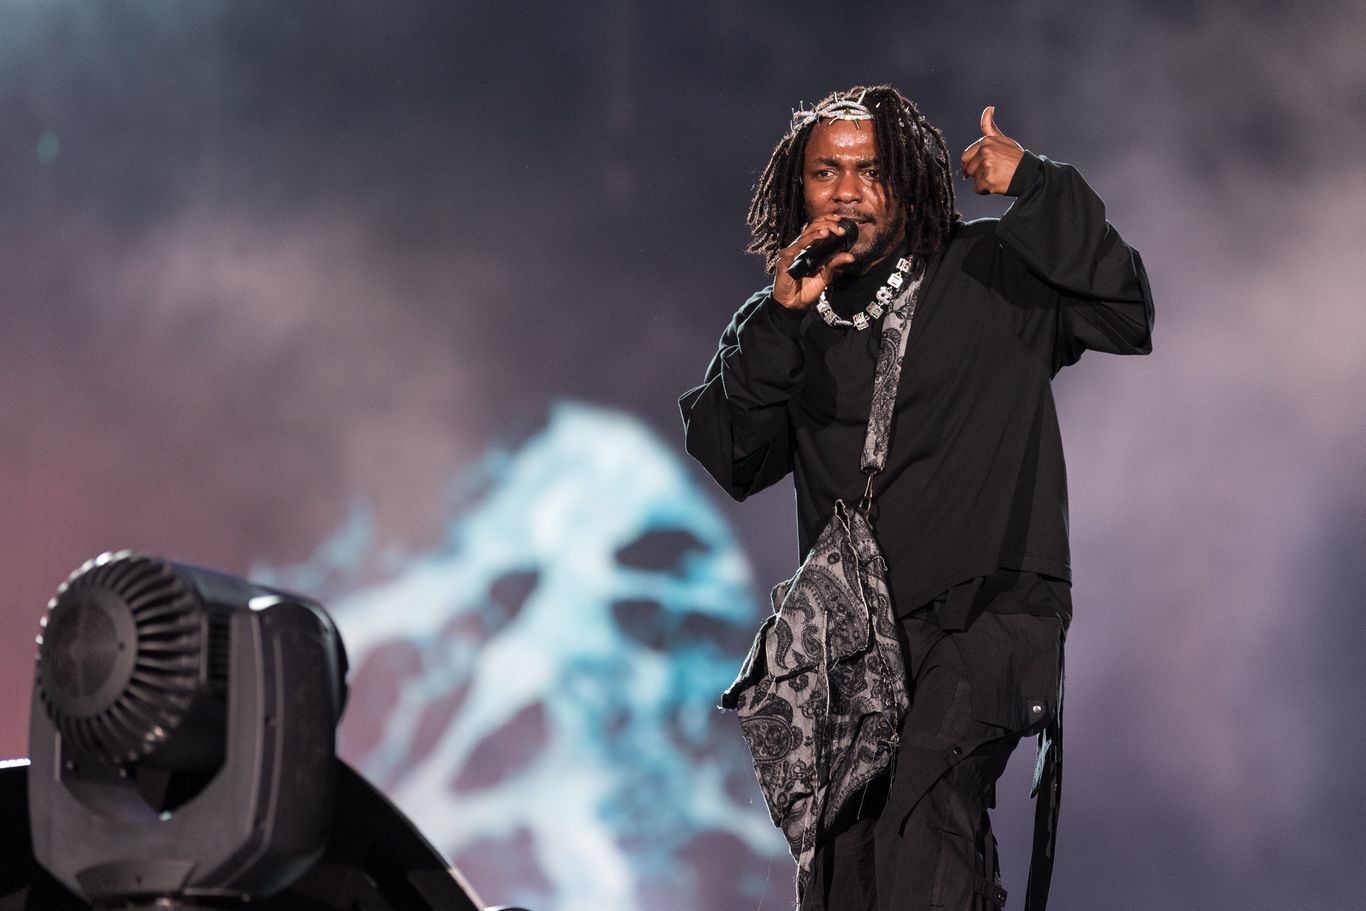 Bonnaroo 2023: Kendrick Lamar takes festival's biggest stage